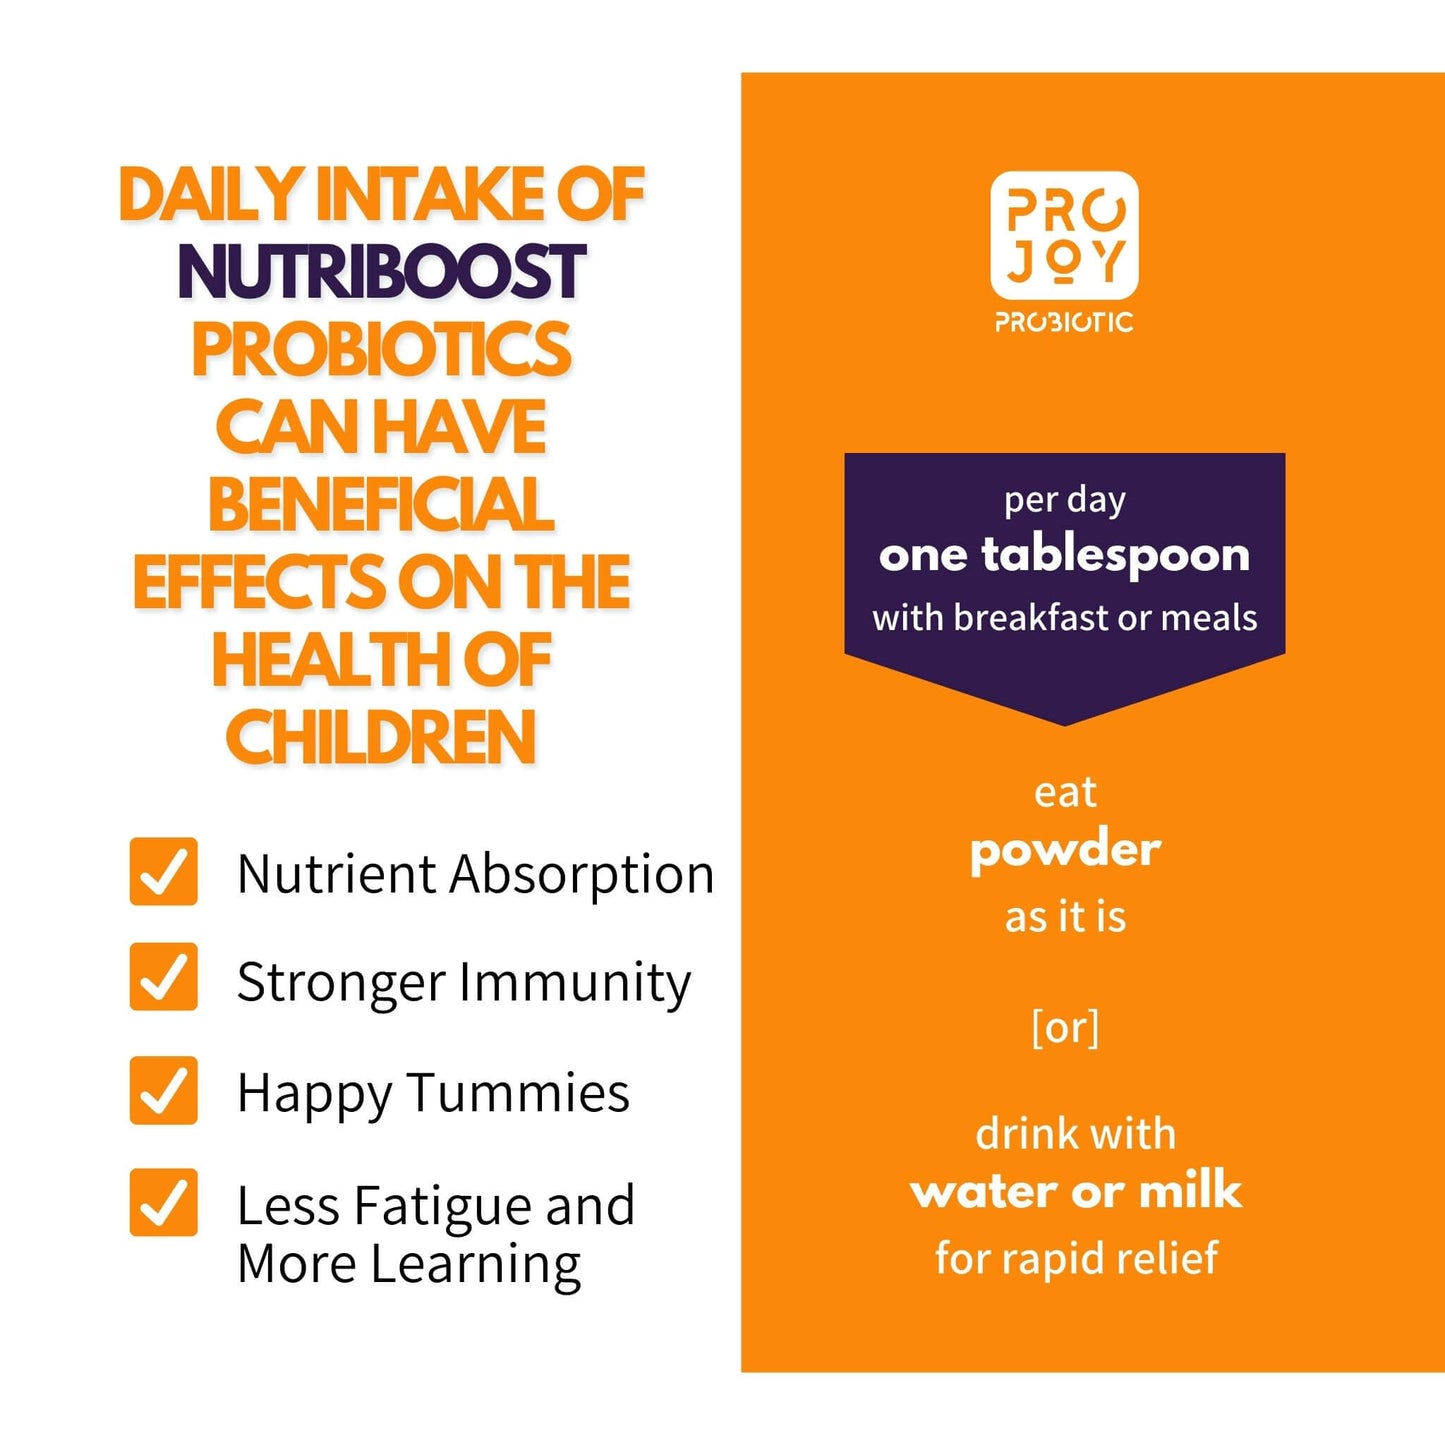 Projoy Kids NutriBoost Probiotic with Prebiotics